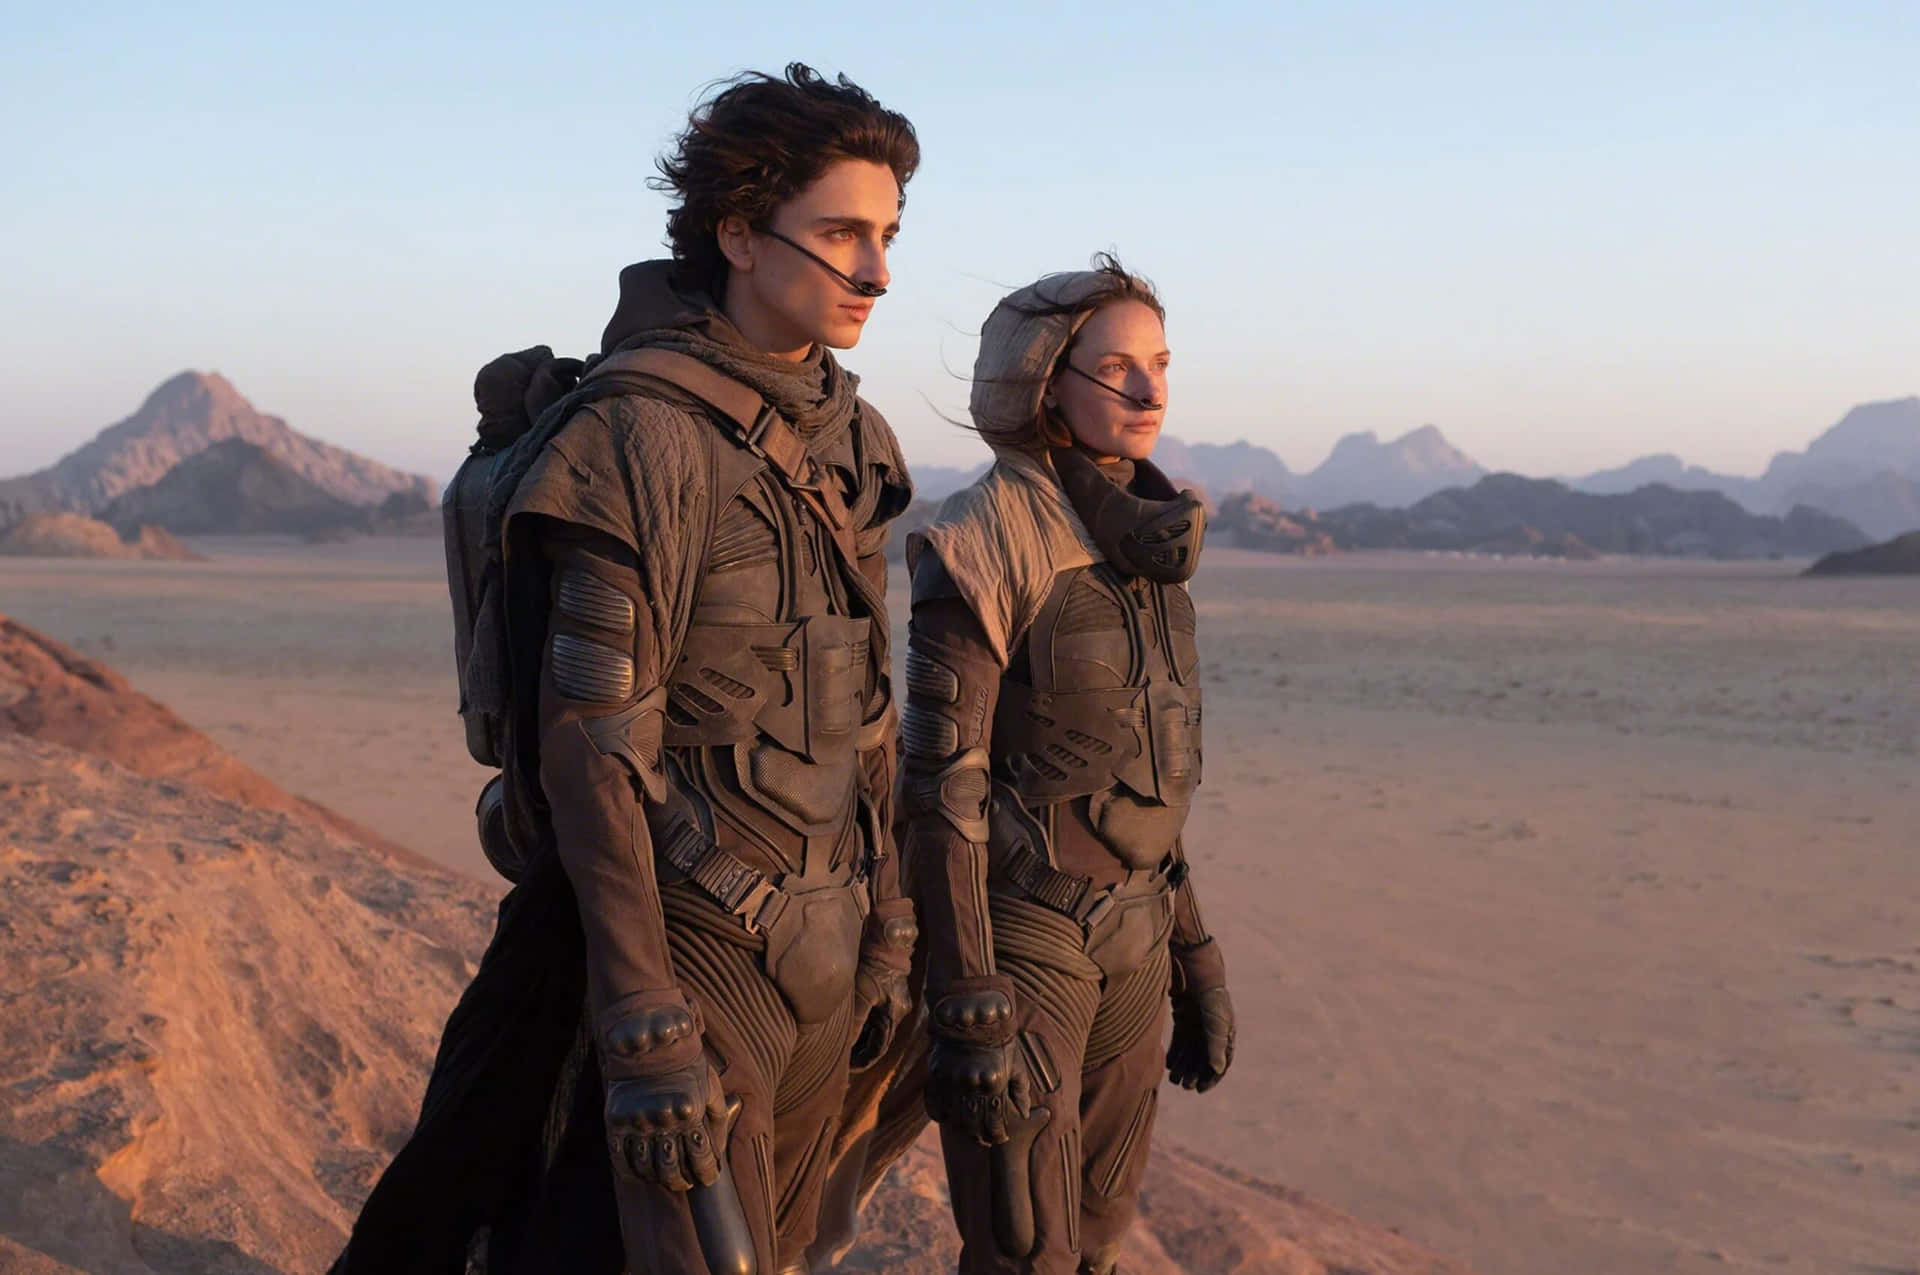 Arrakis, the Arid and Unforgiving Landscape of Dune